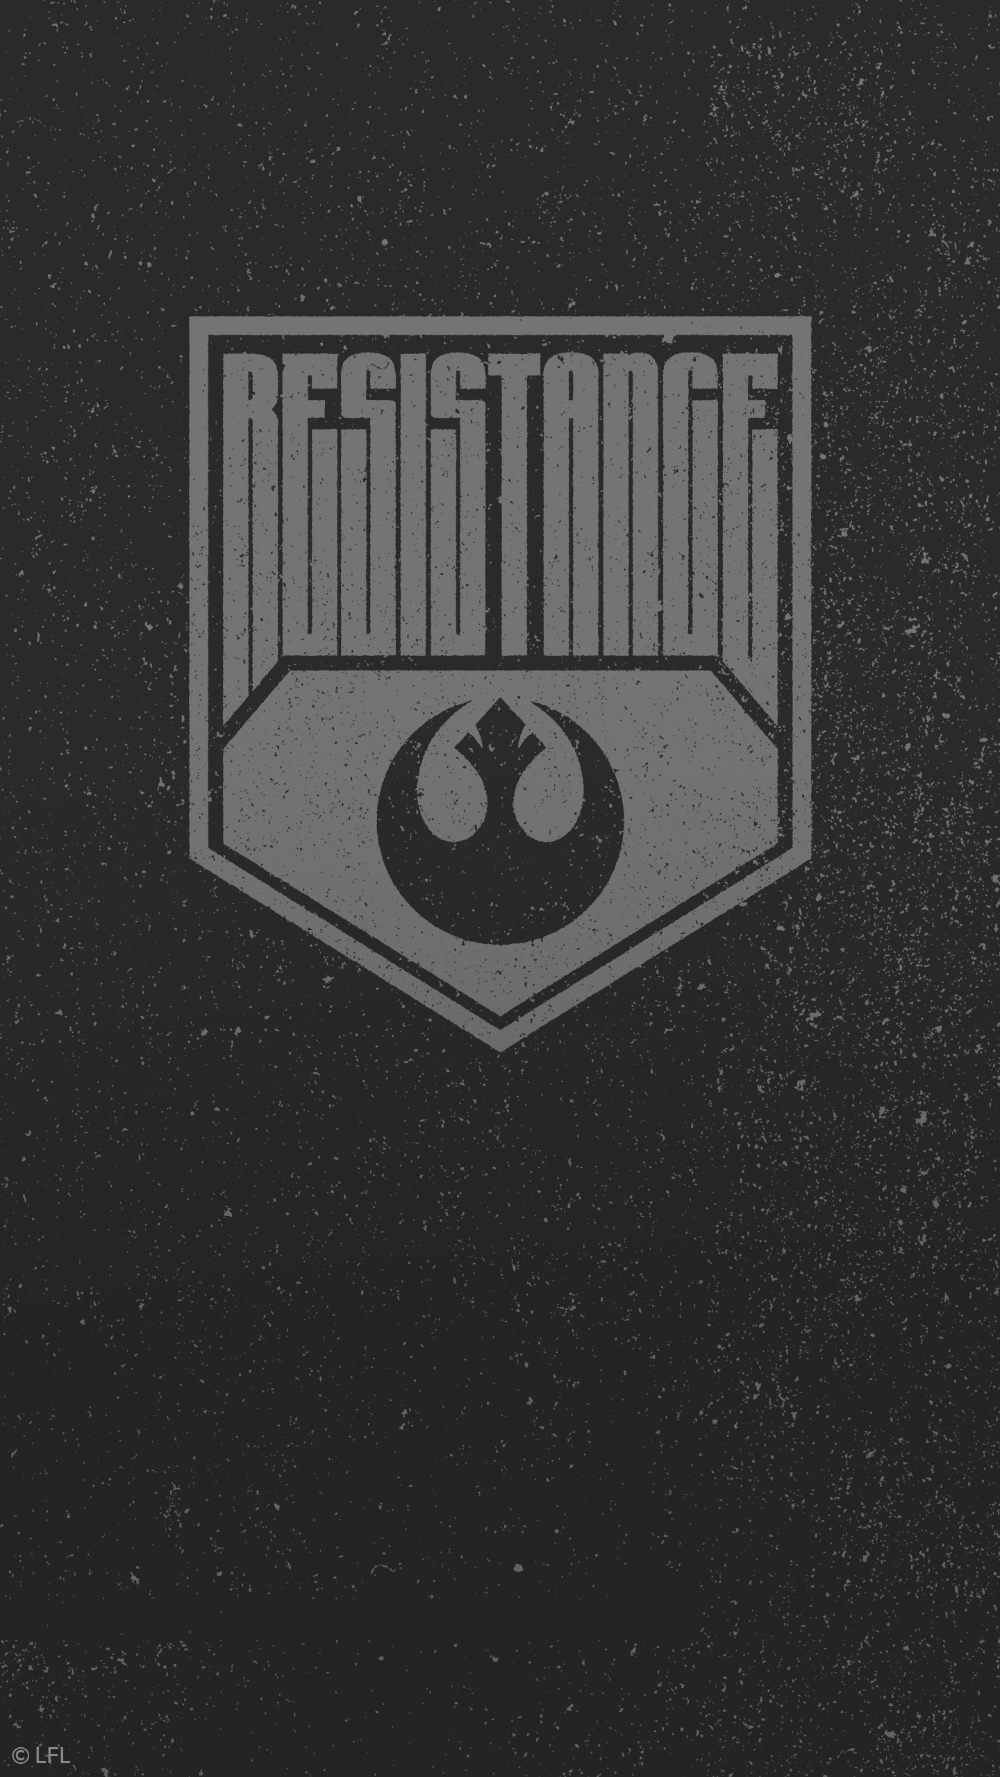 Star Wars Resistance Wallpaper. Star wars